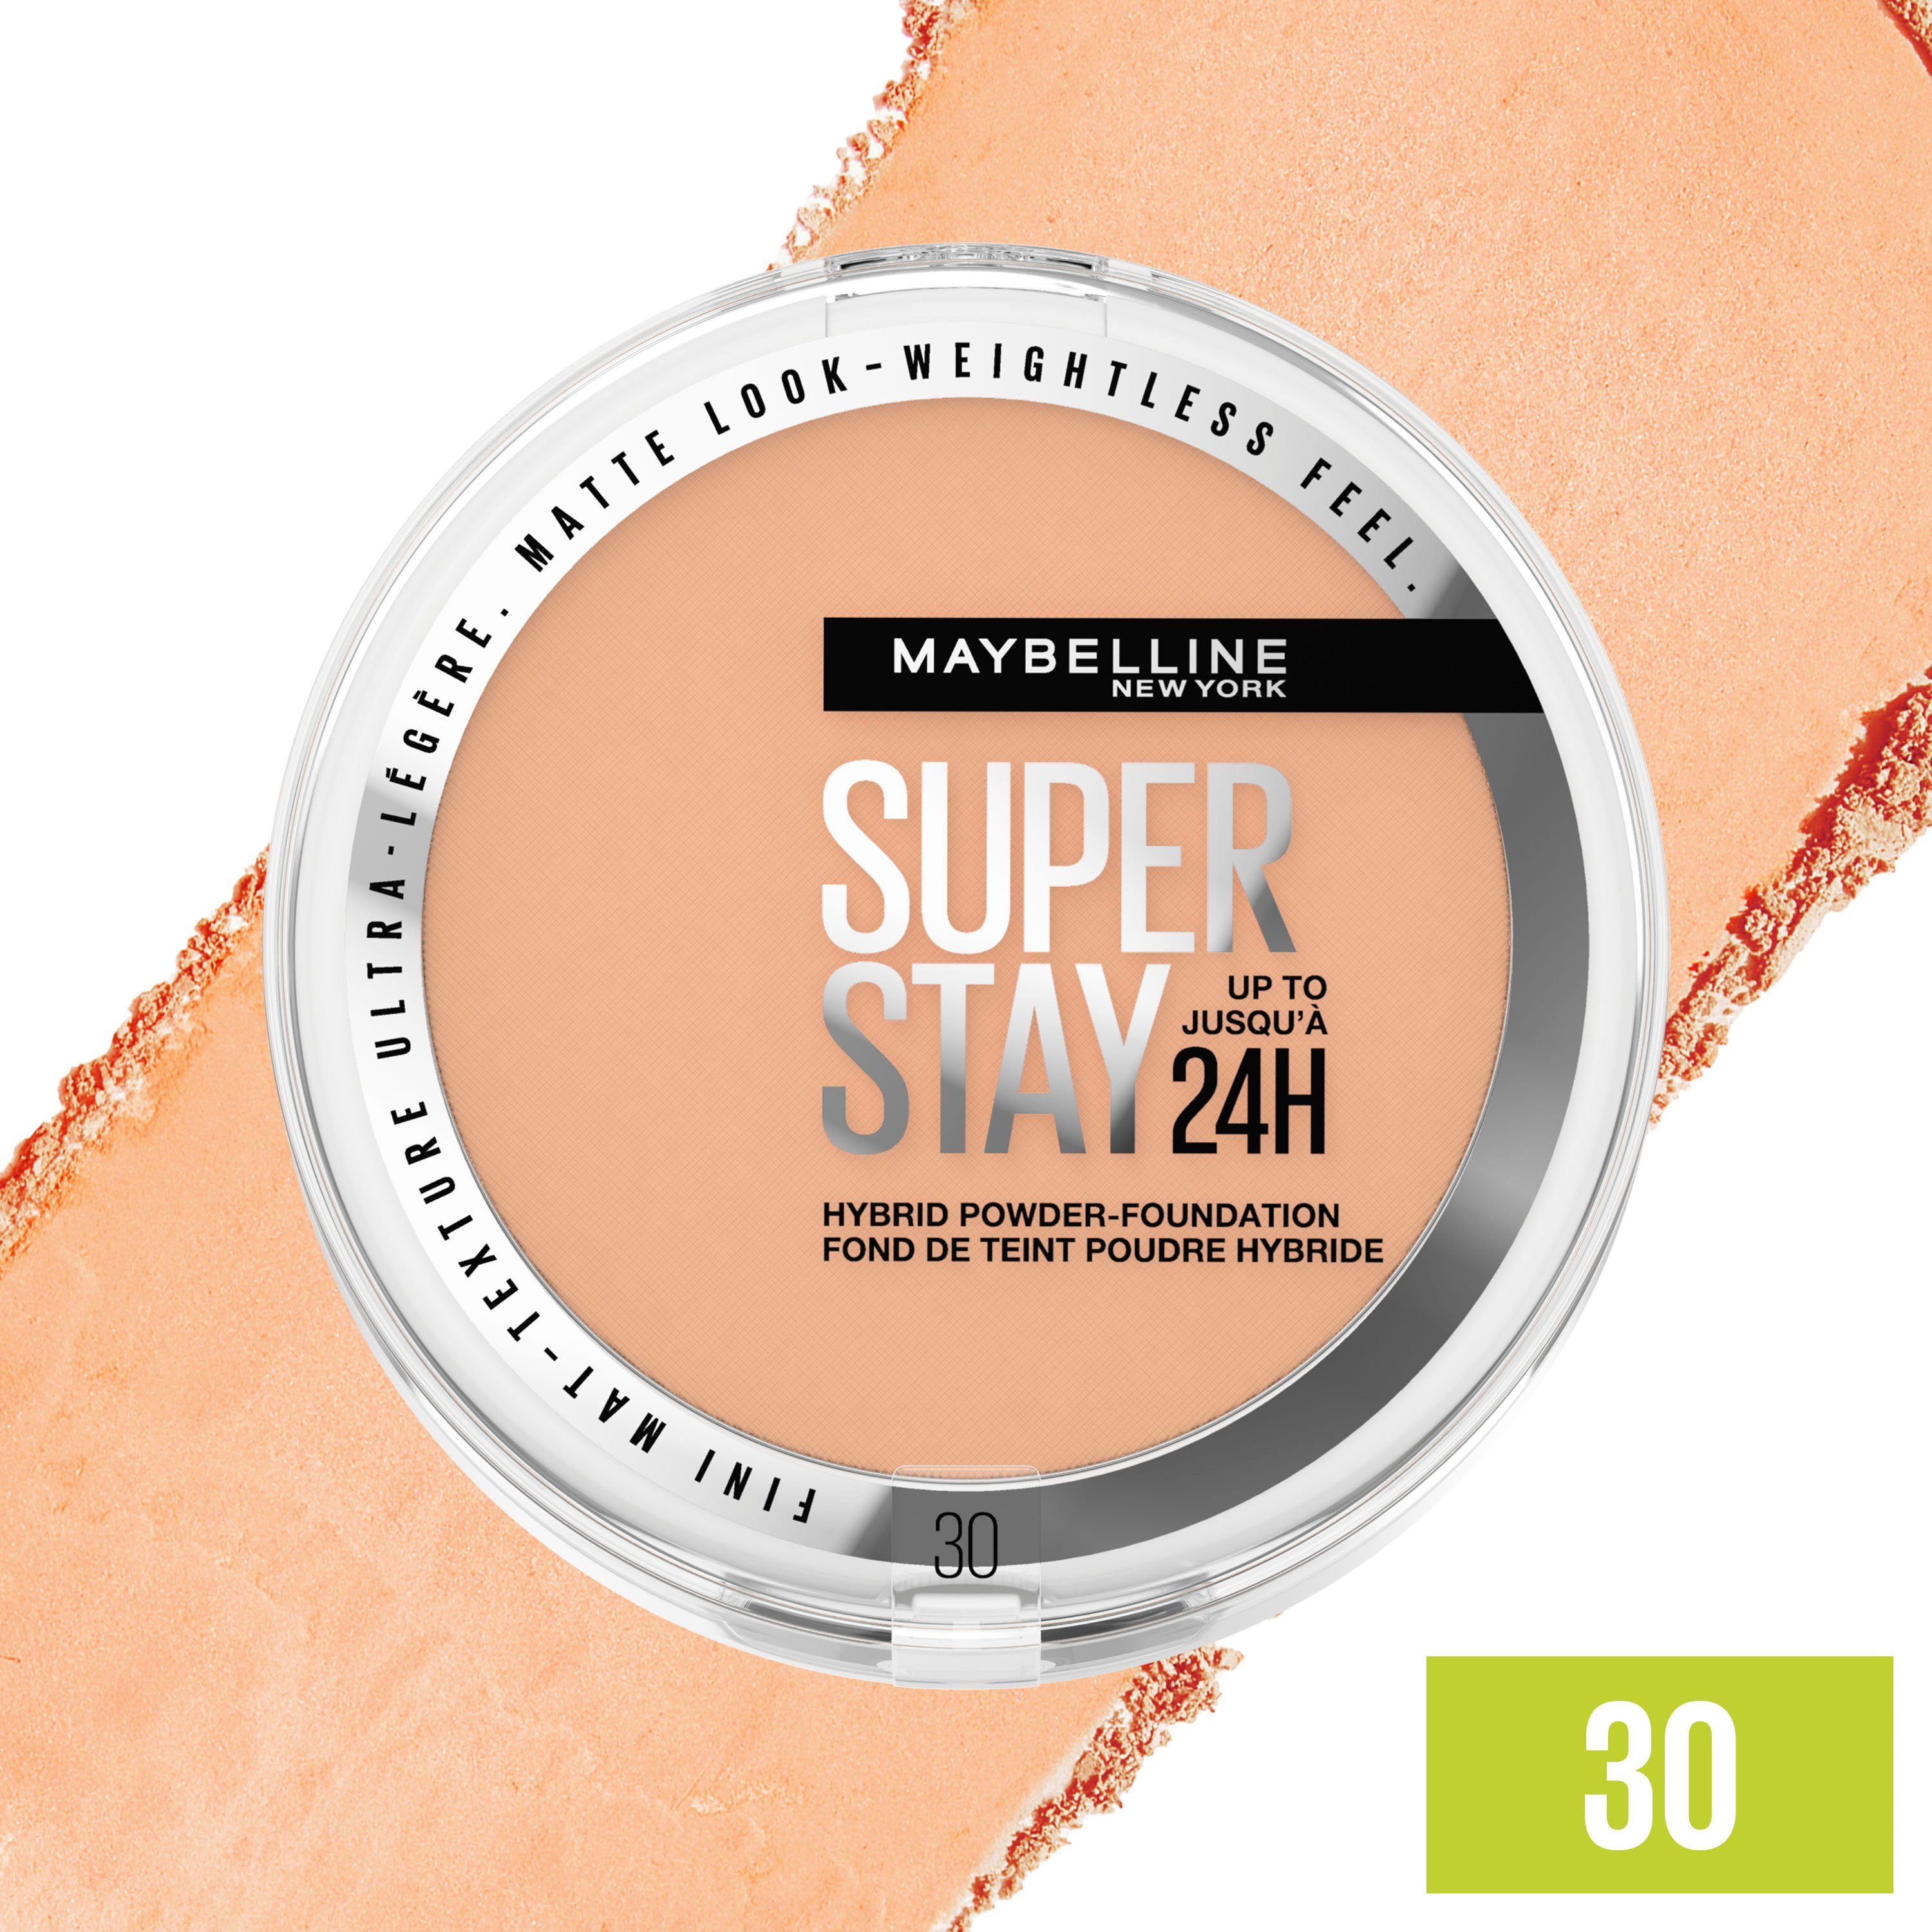 MAYBELLINE Stay York New Foundation Hybrides Super YORK Maybelline Make-Up NEW Puder